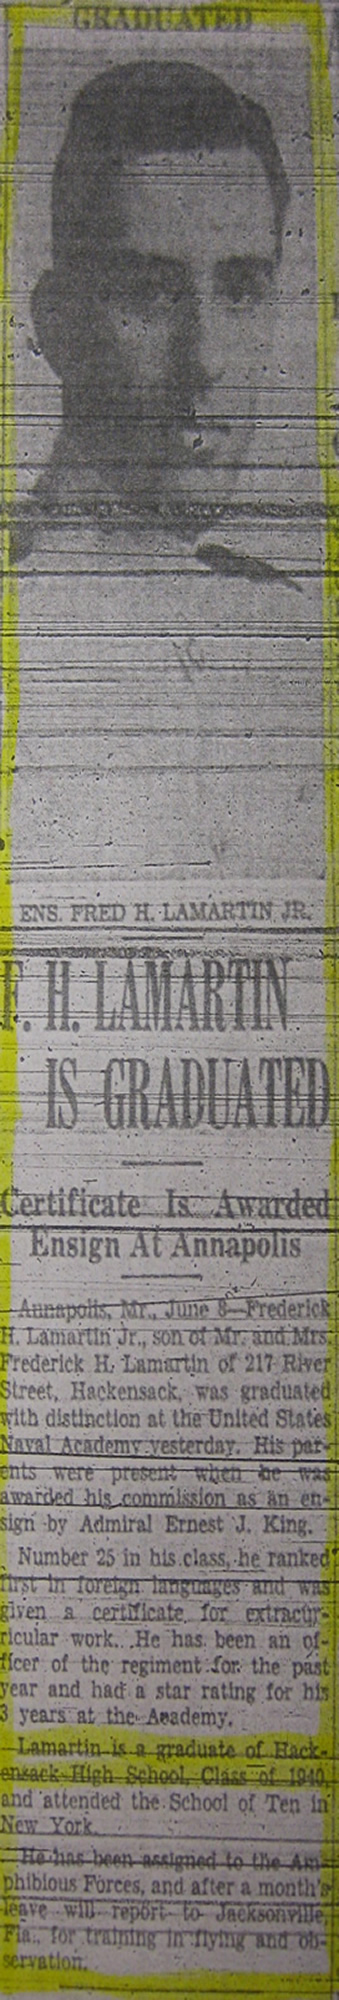 Frederick H. Lamartin Article